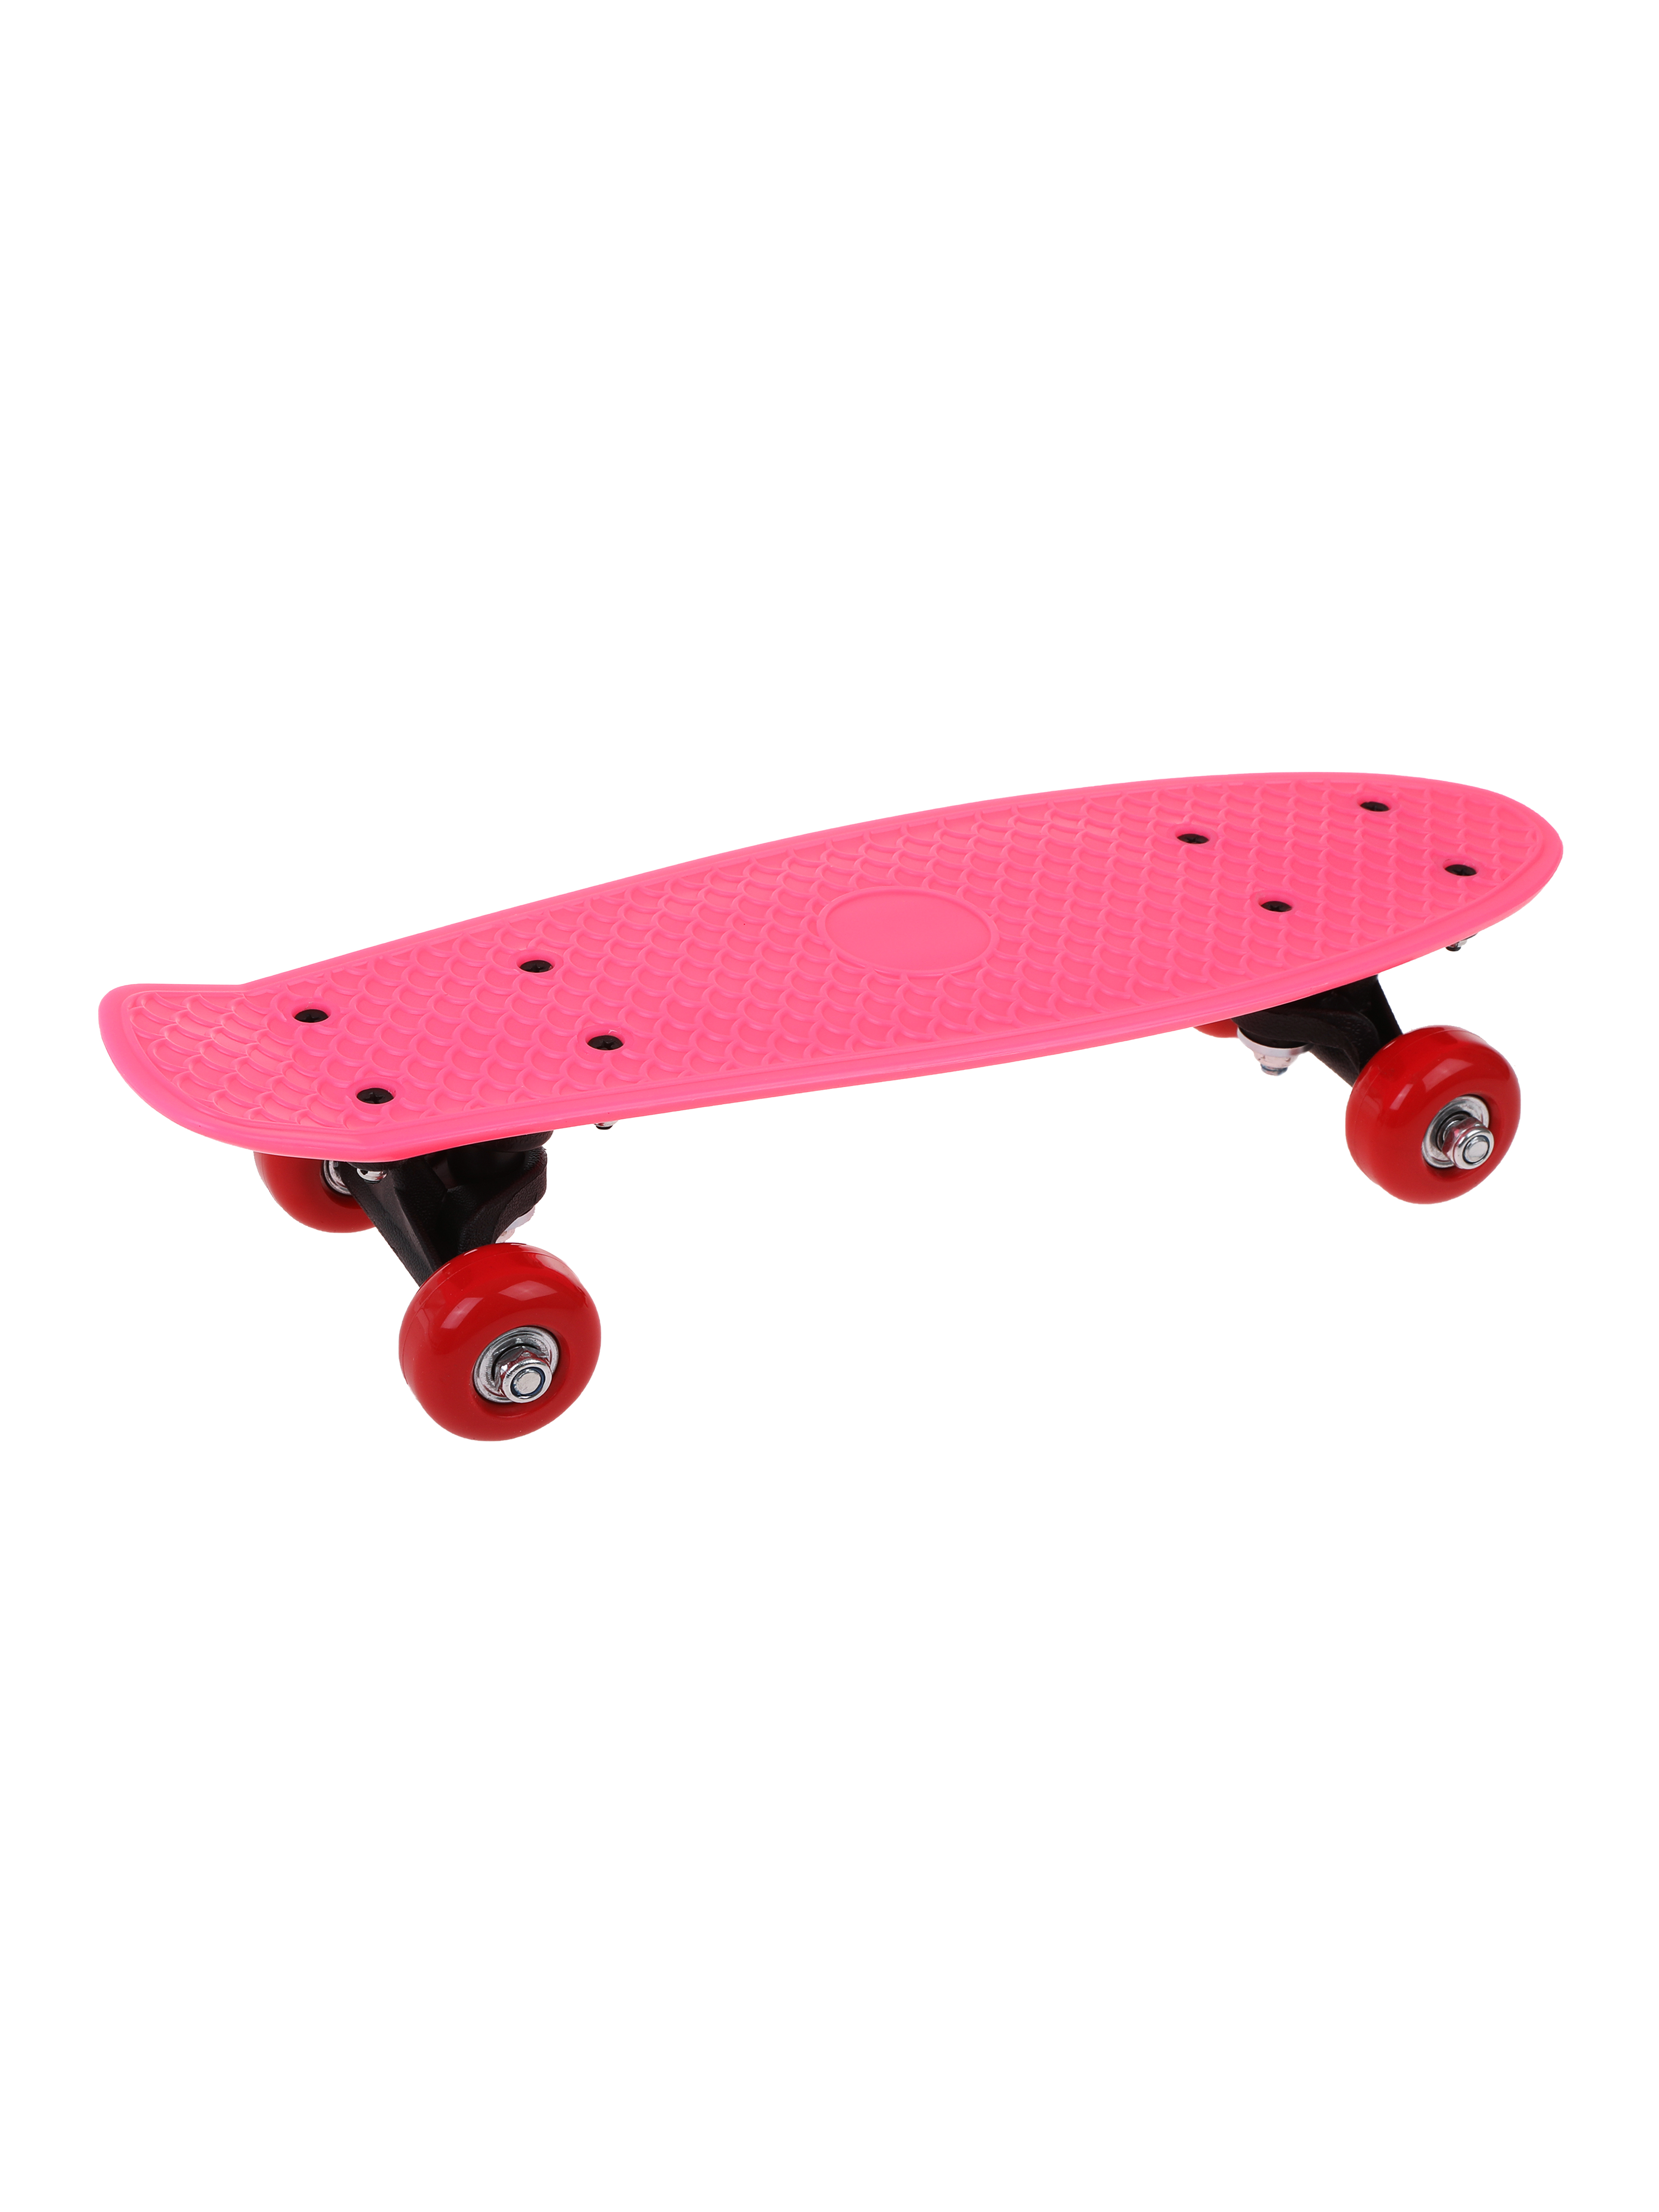 Скейтборд Наша Игрушка пенниборд пластик 41*12 см колеса PVC крепления пластик розовый - фото 4